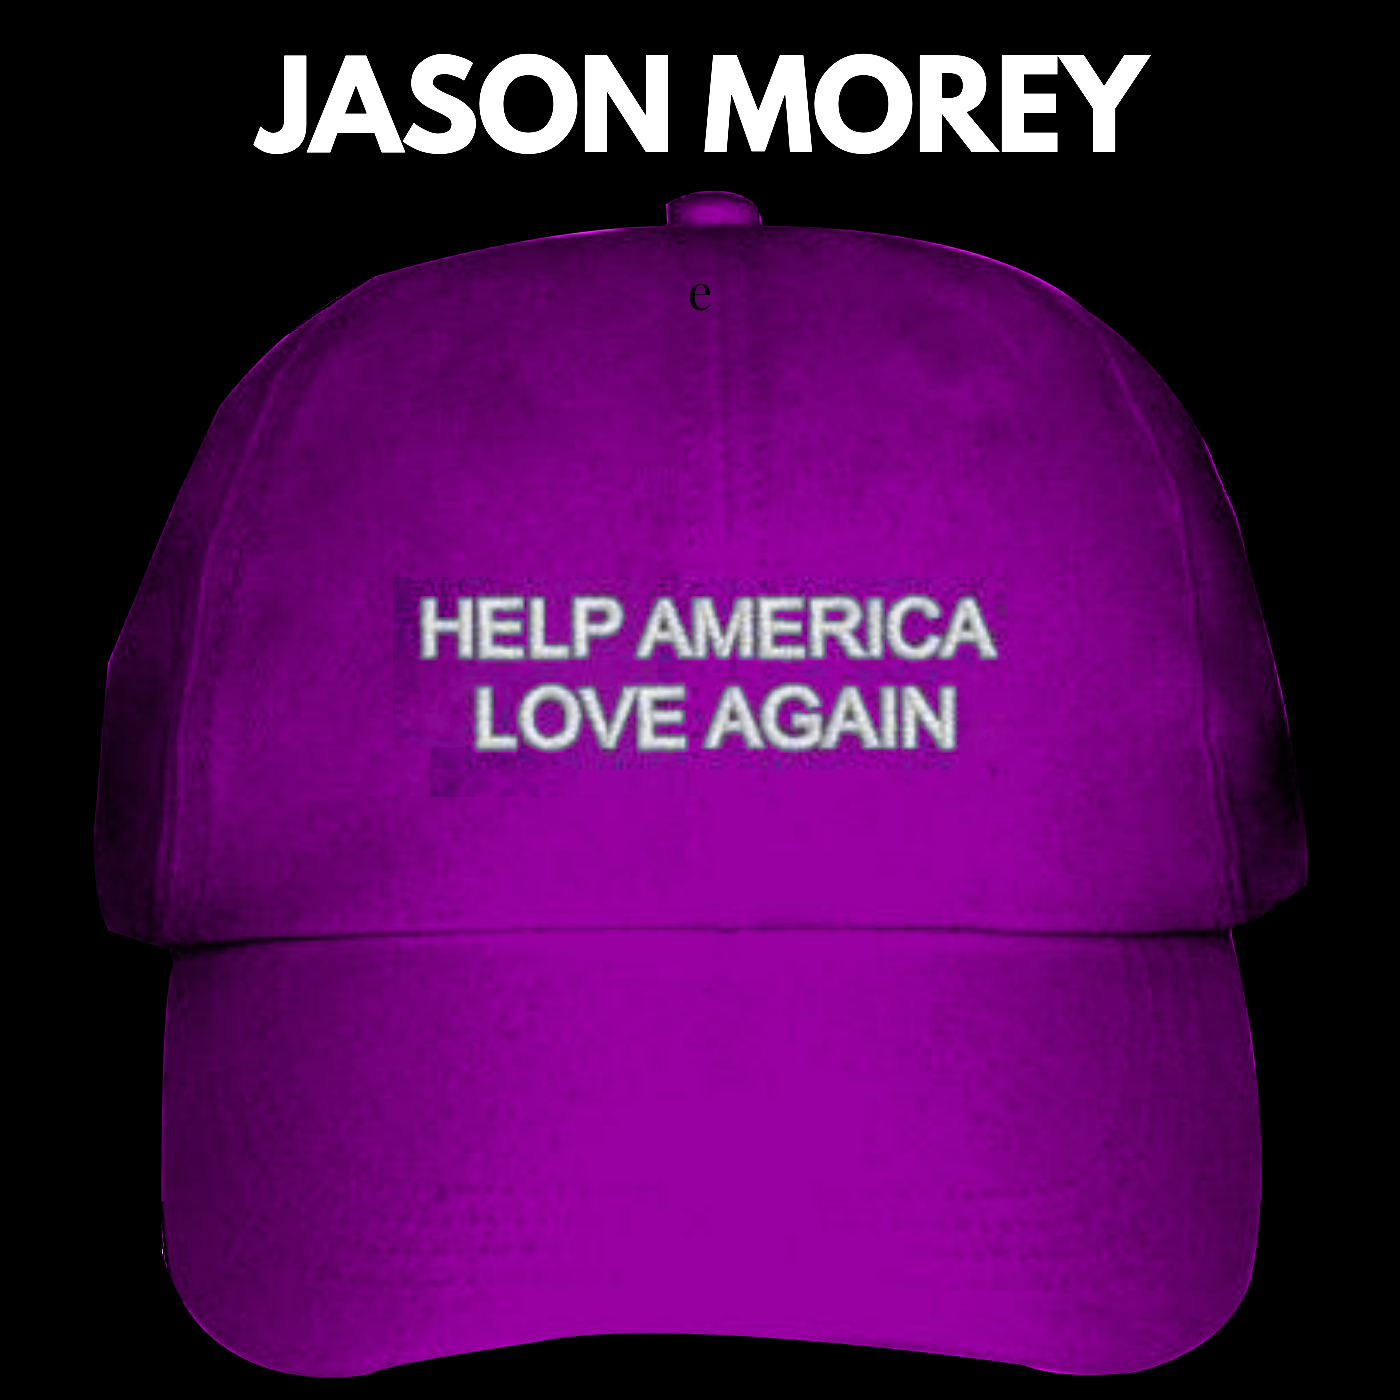 Jason Morey - Help America Love Again - CD